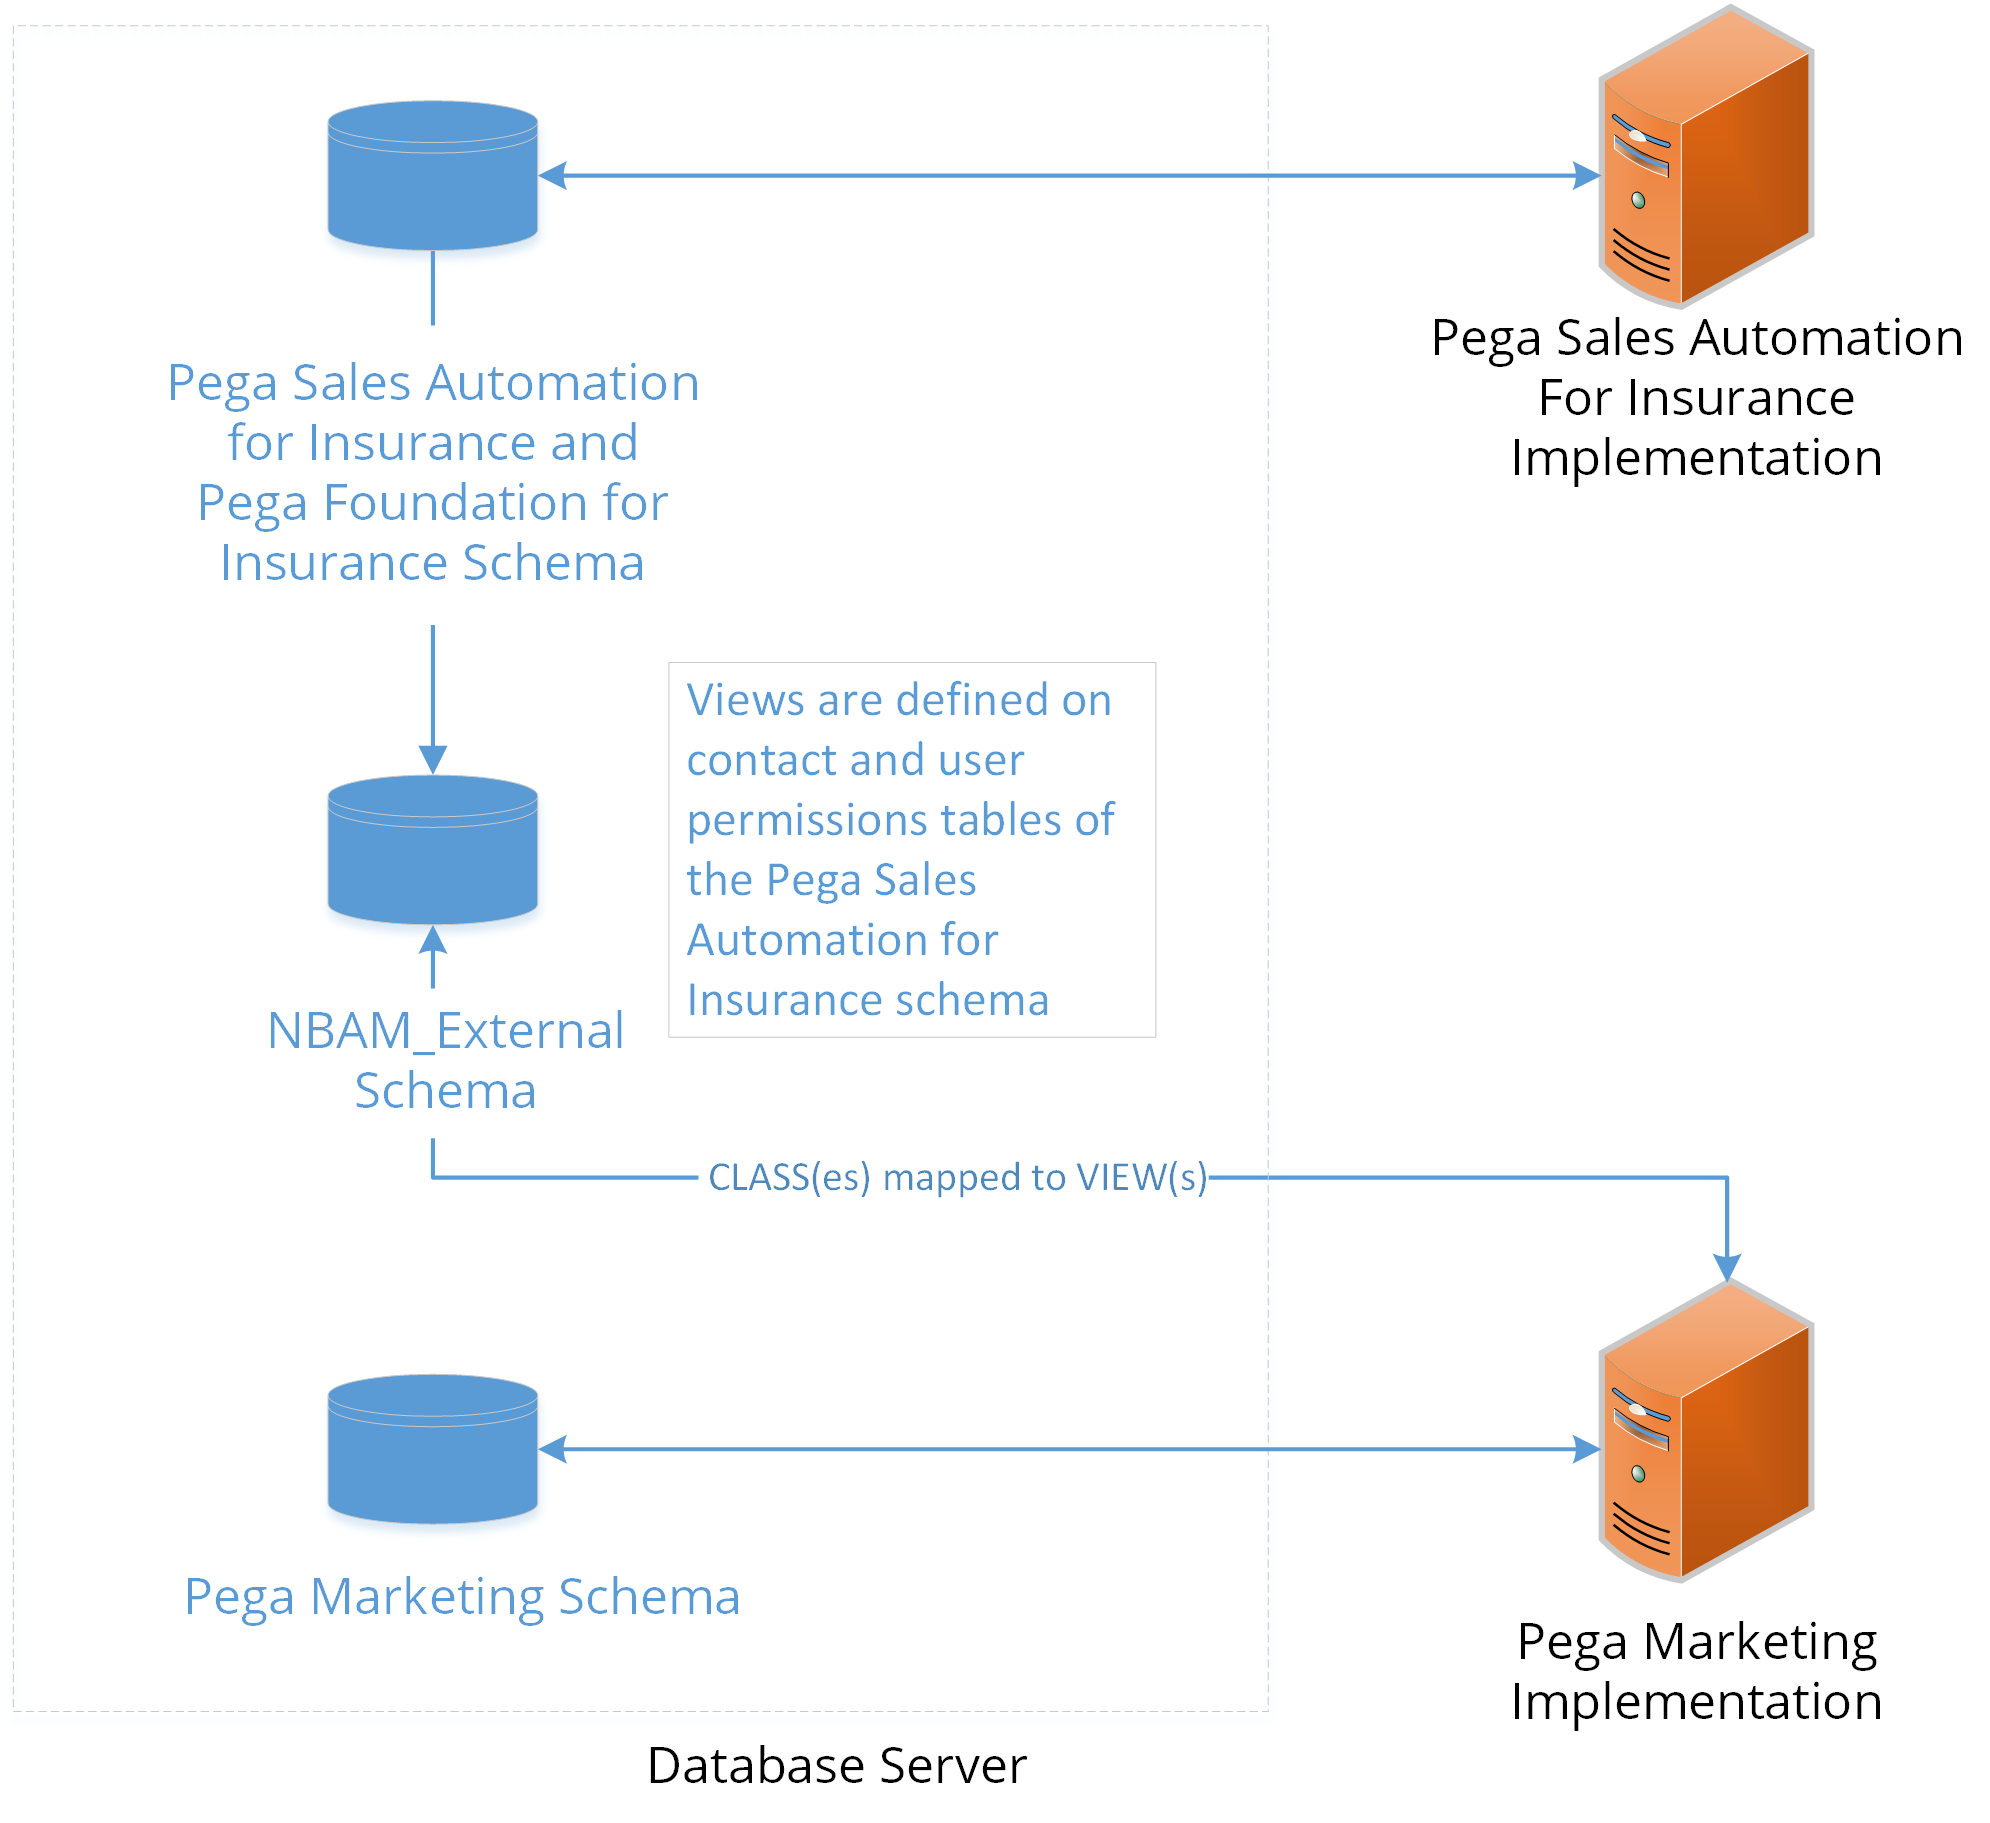 Pegasystems CRM & Customer Interaction Pega Sales Automation and Pega